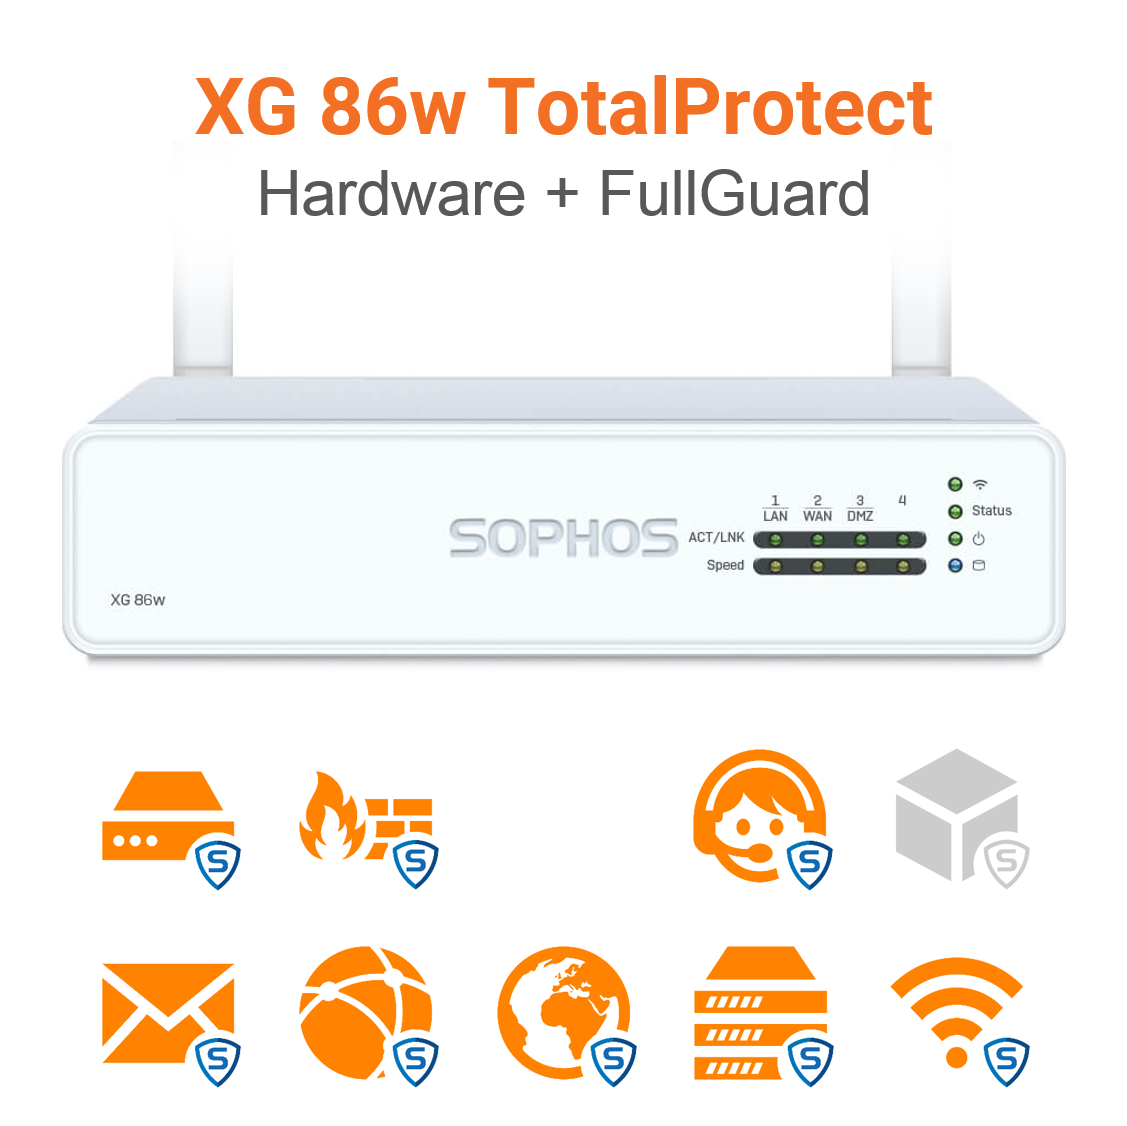 Sophos XG 86w TotalProtect Bundle (Hardware + Lizenz)